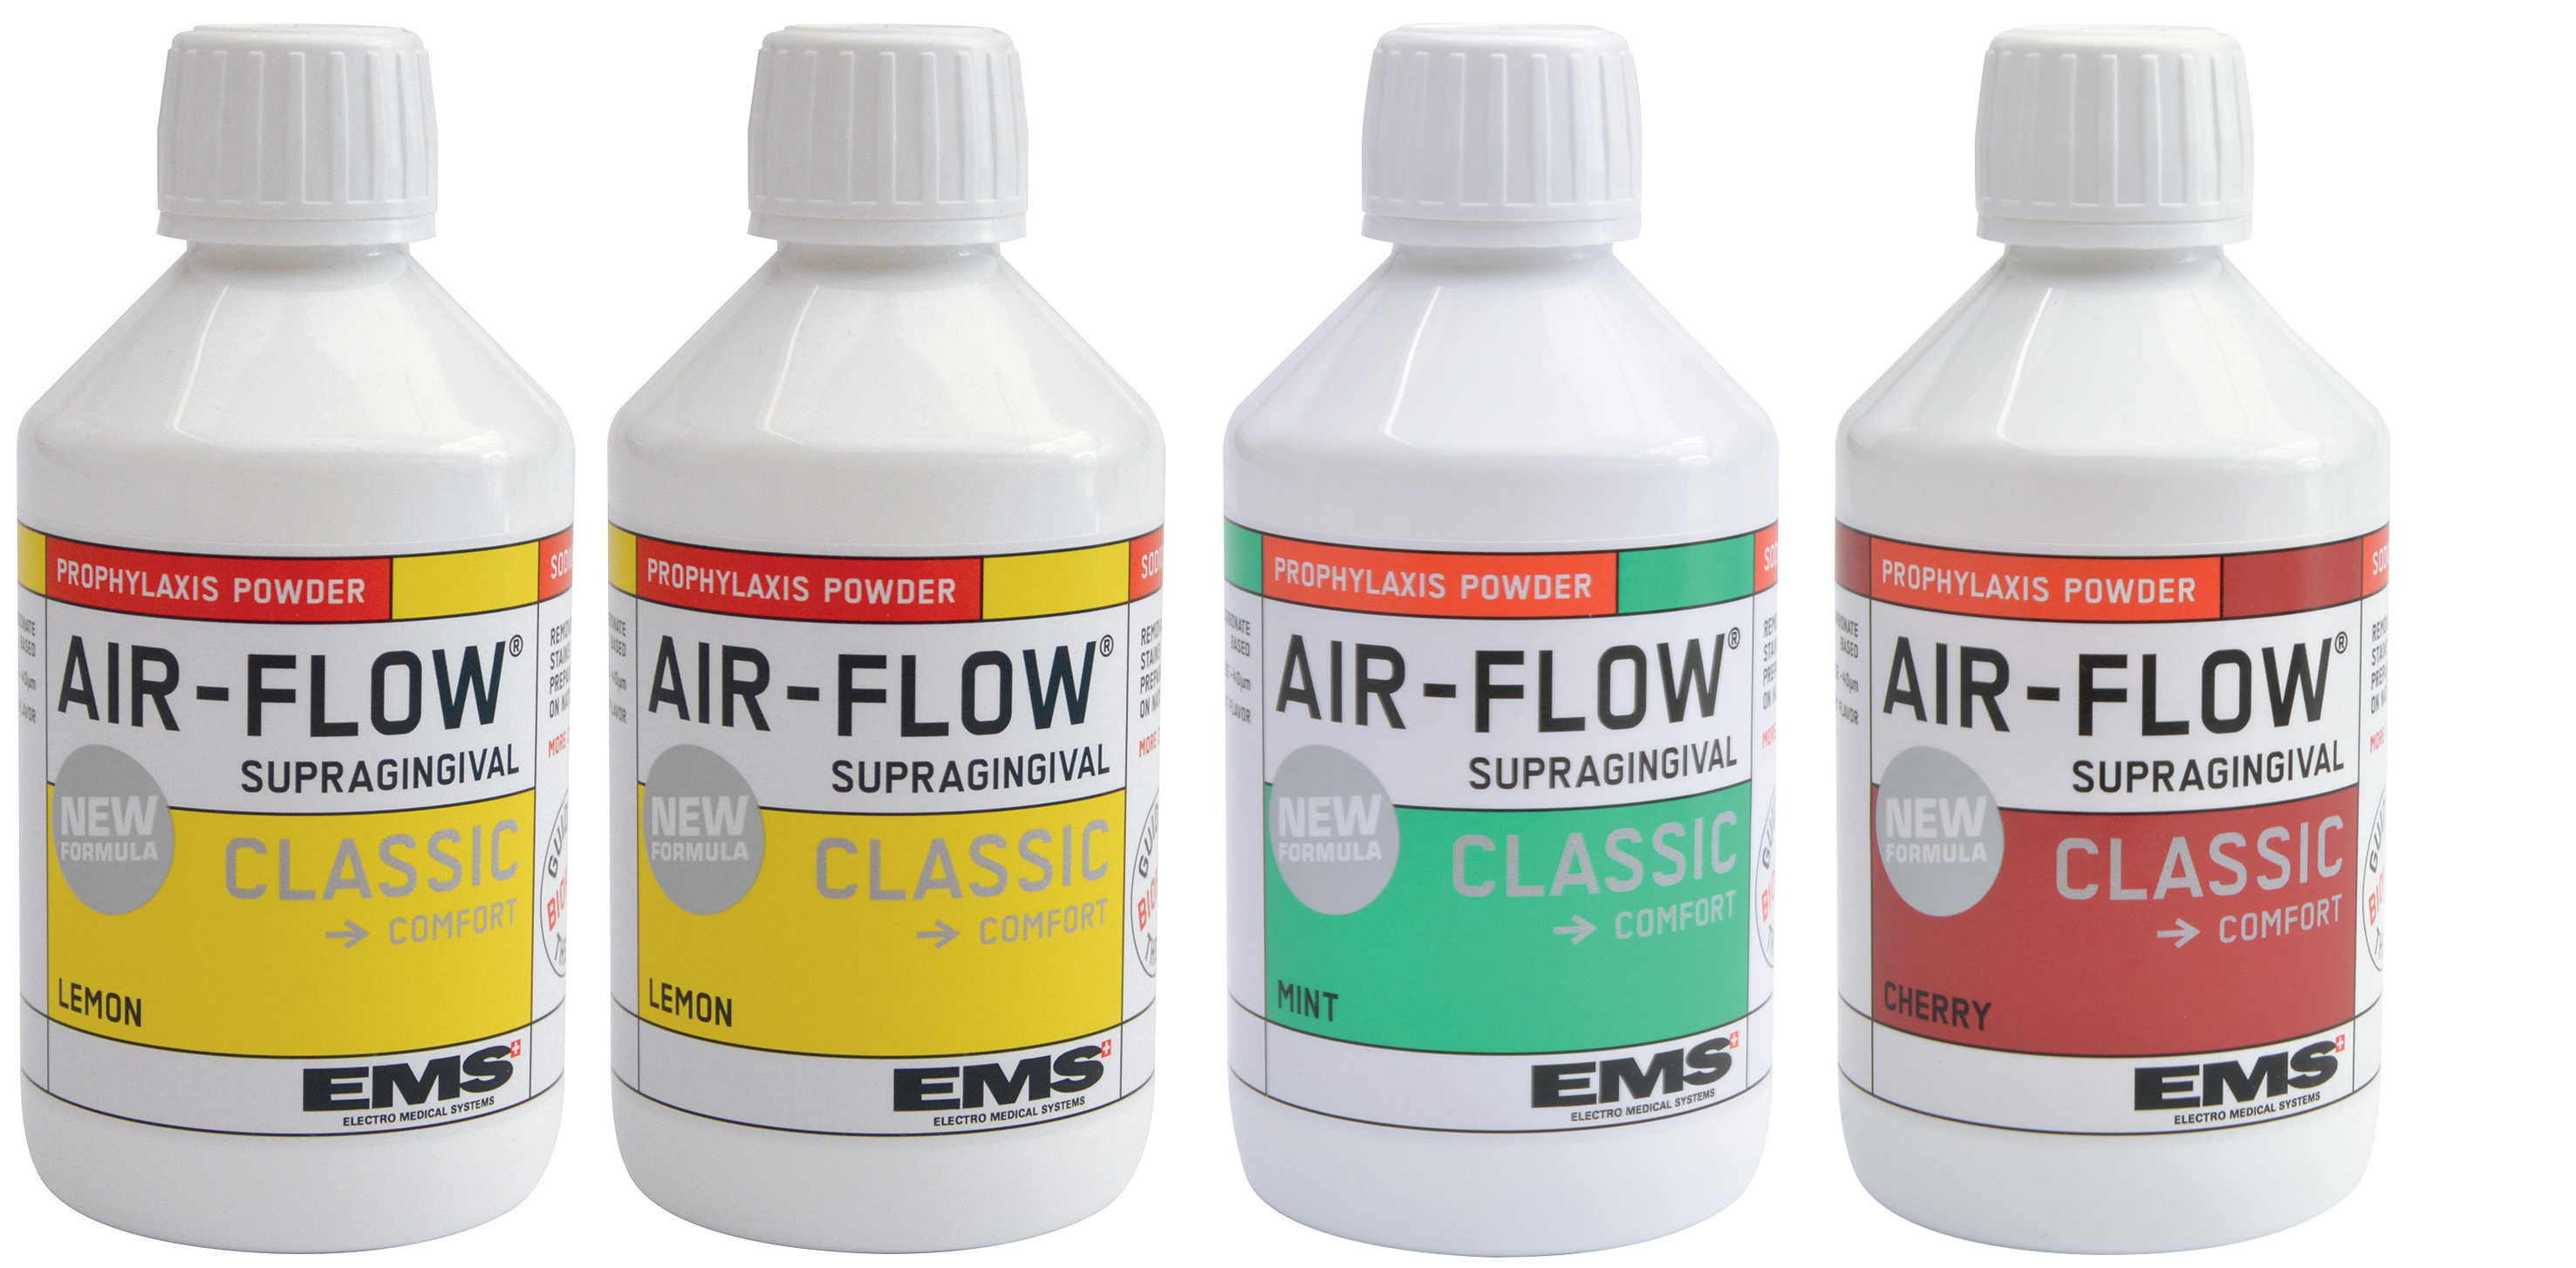 Array - Air Flow Classic Ems 4 flaconi assortiti da 300g